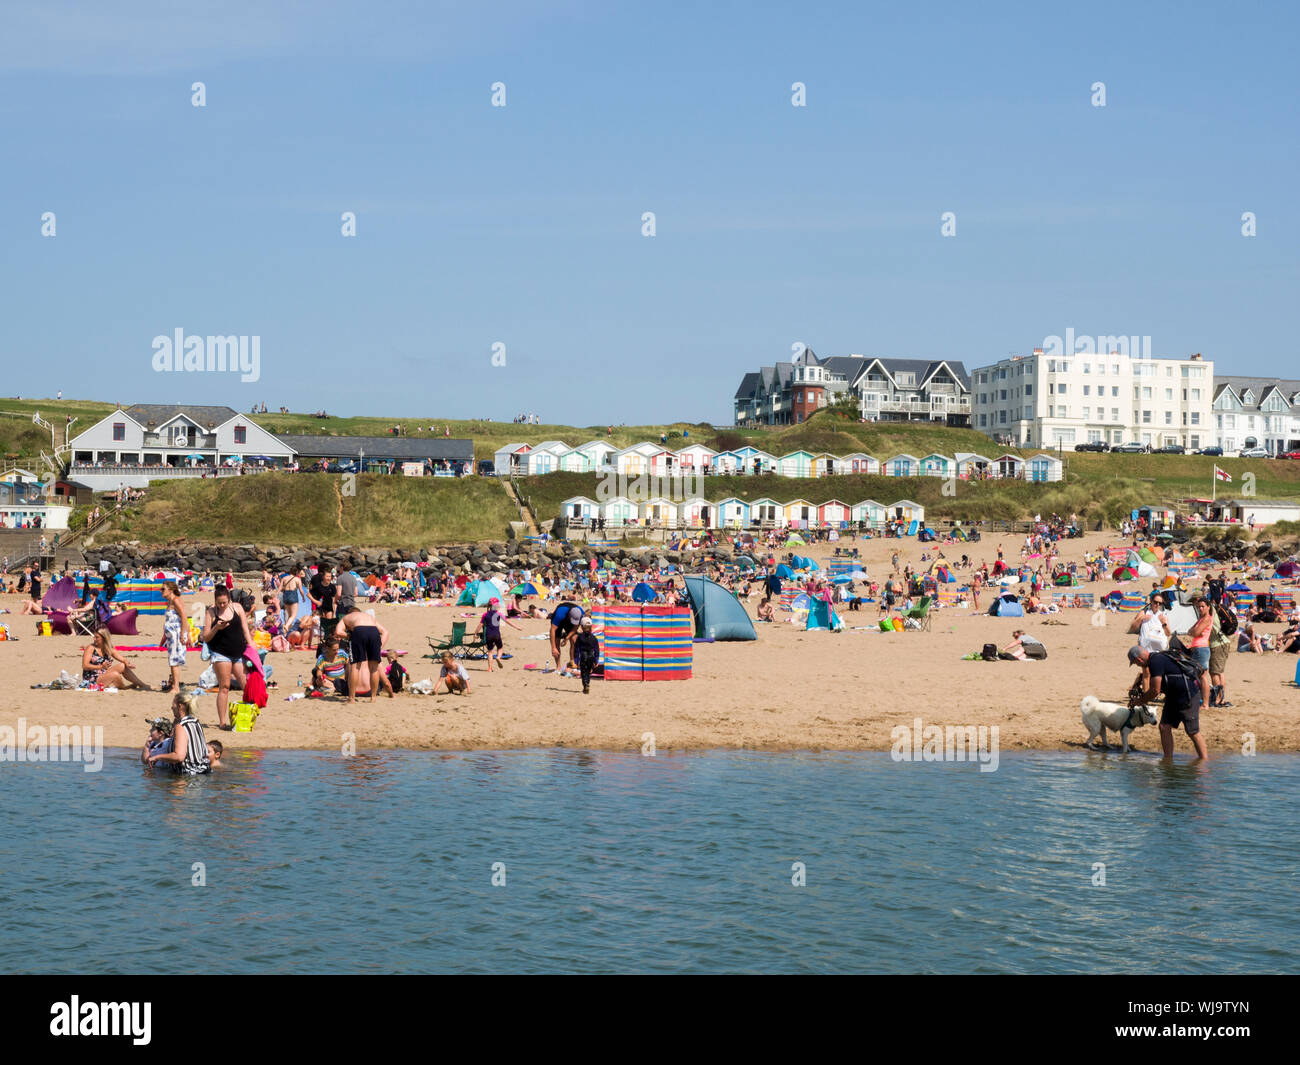 Summerleaze beach, Bude, Cornwall, UK during the summer holidays. Stock Photo